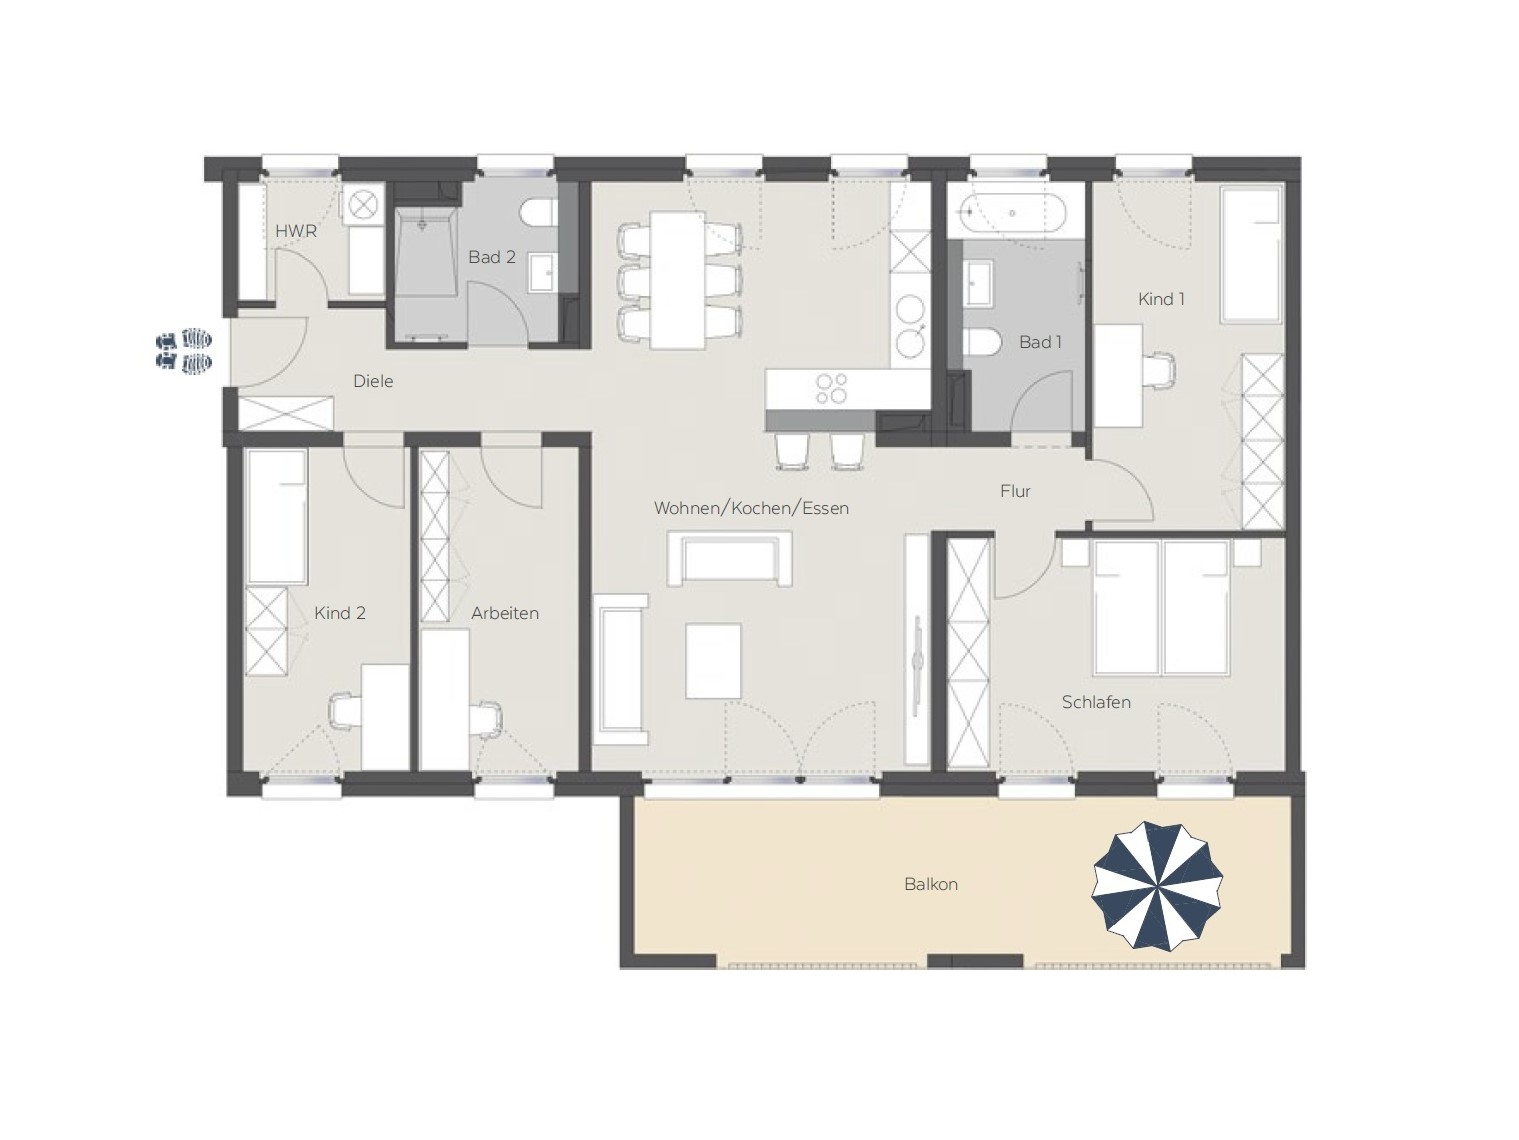 Grundriss - ca. 134 m² Wohnfläche